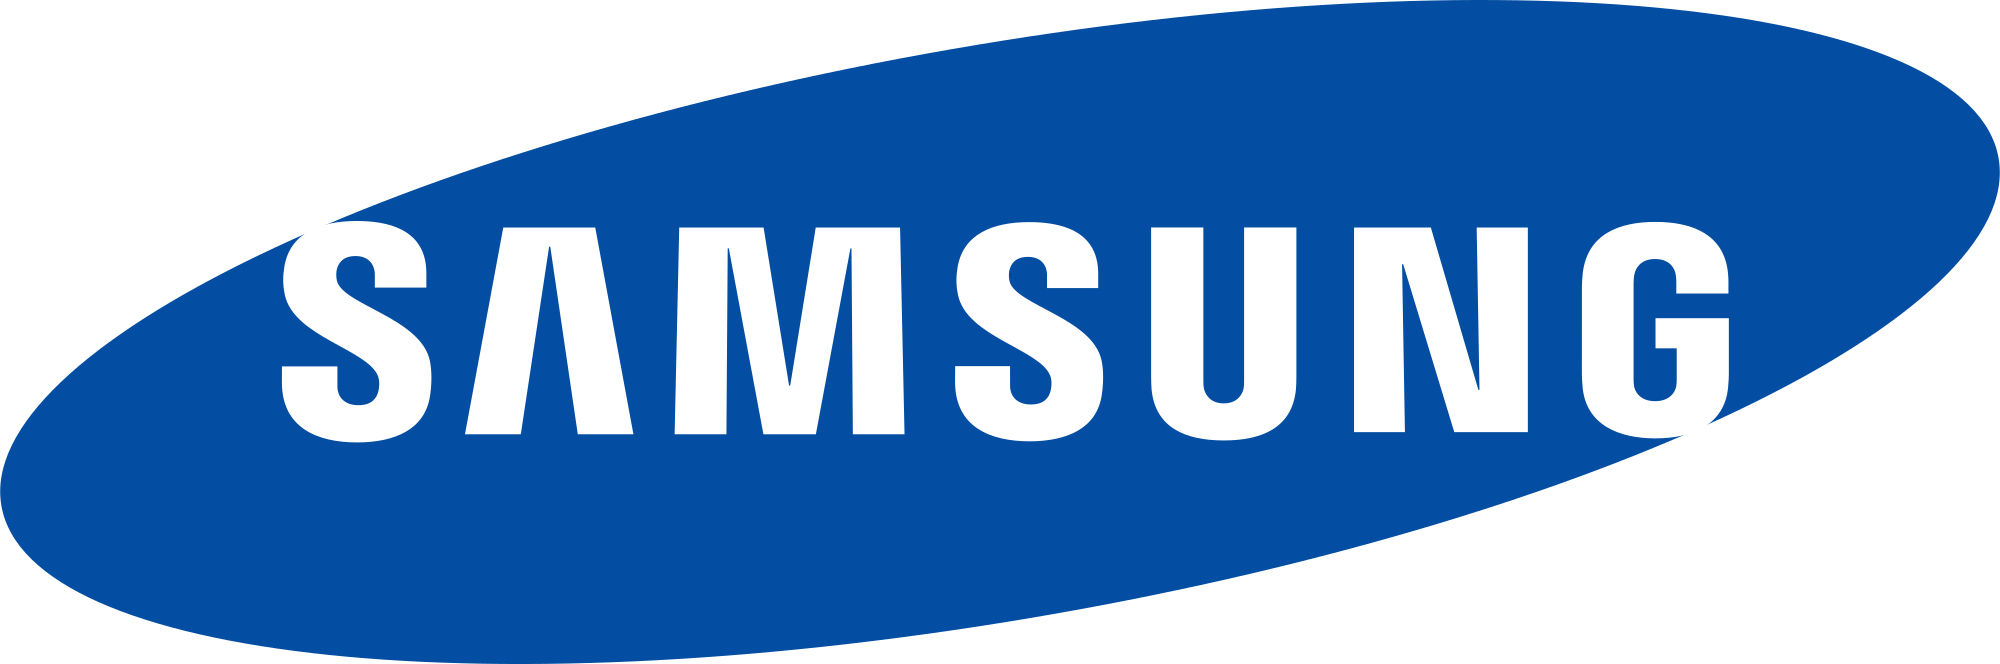 Blue and white Samsung logo